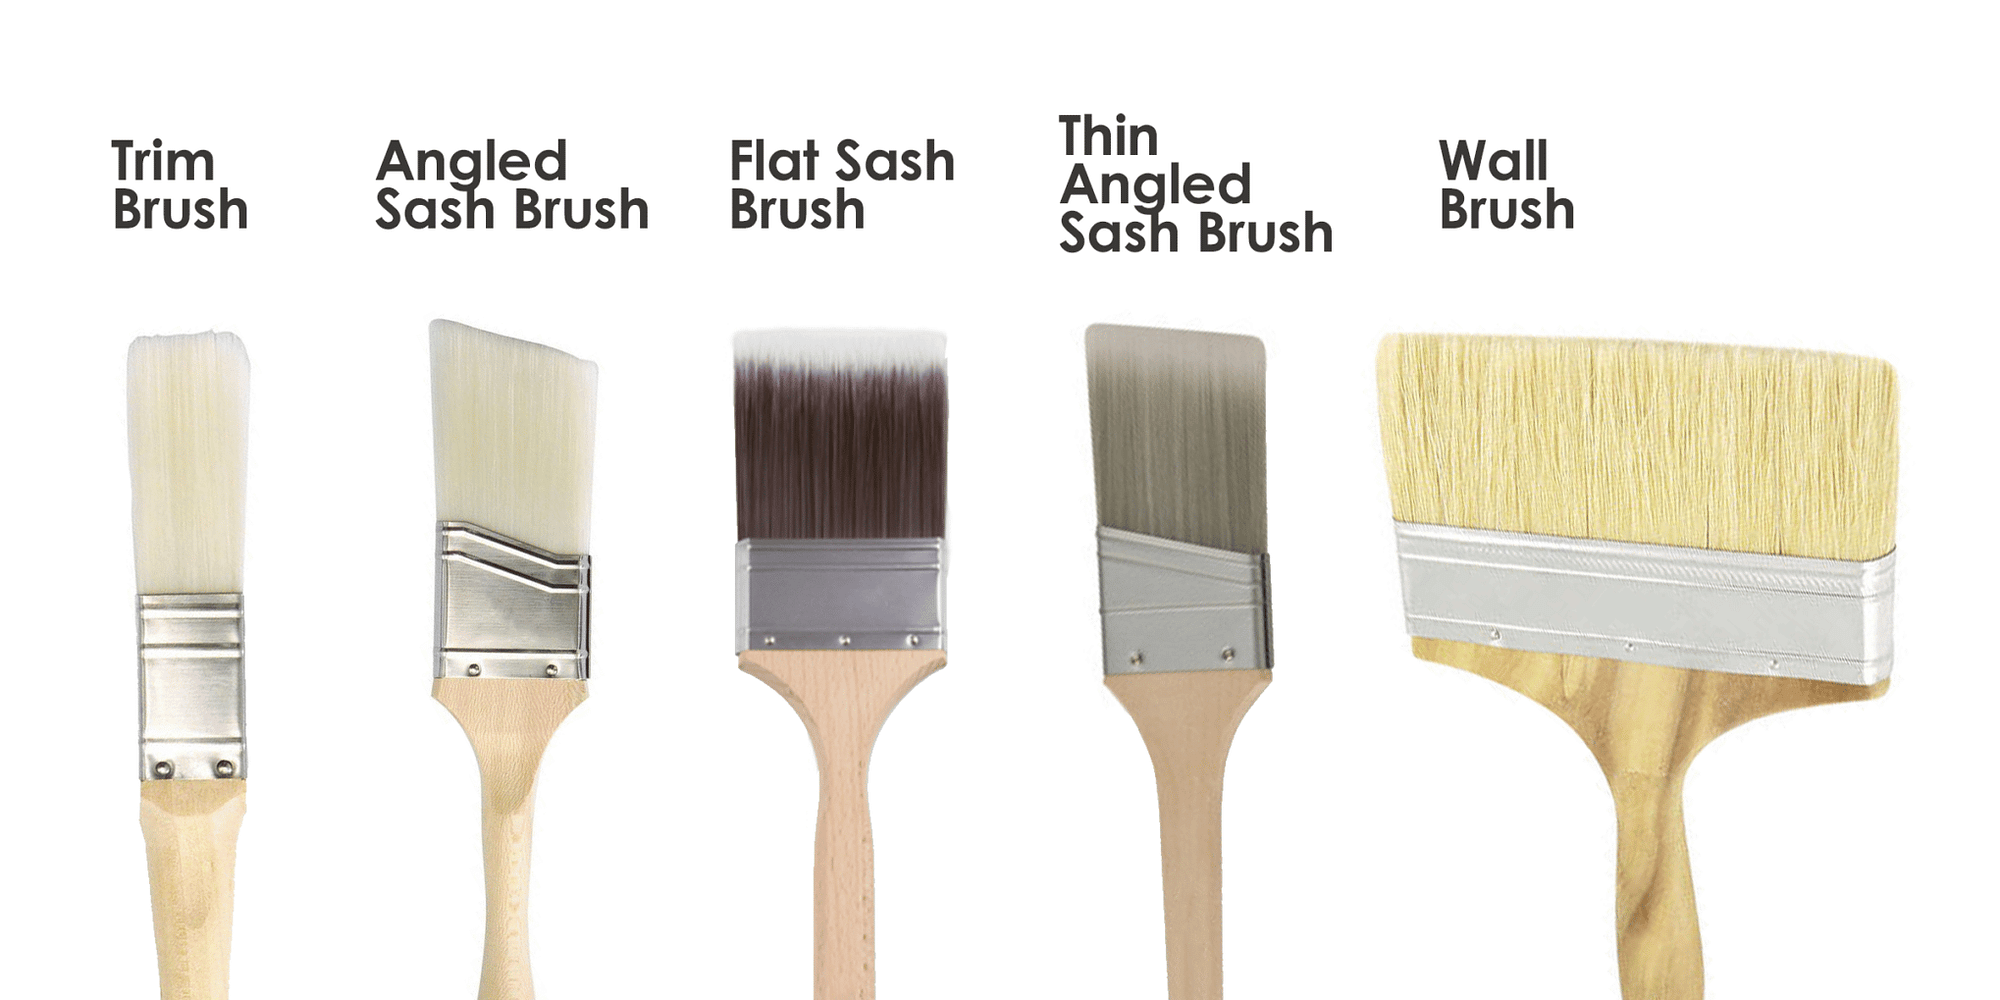 Different Brush Styles: Trim, Angles Sash, Flat Sash, Thin Angled Sash, Wall